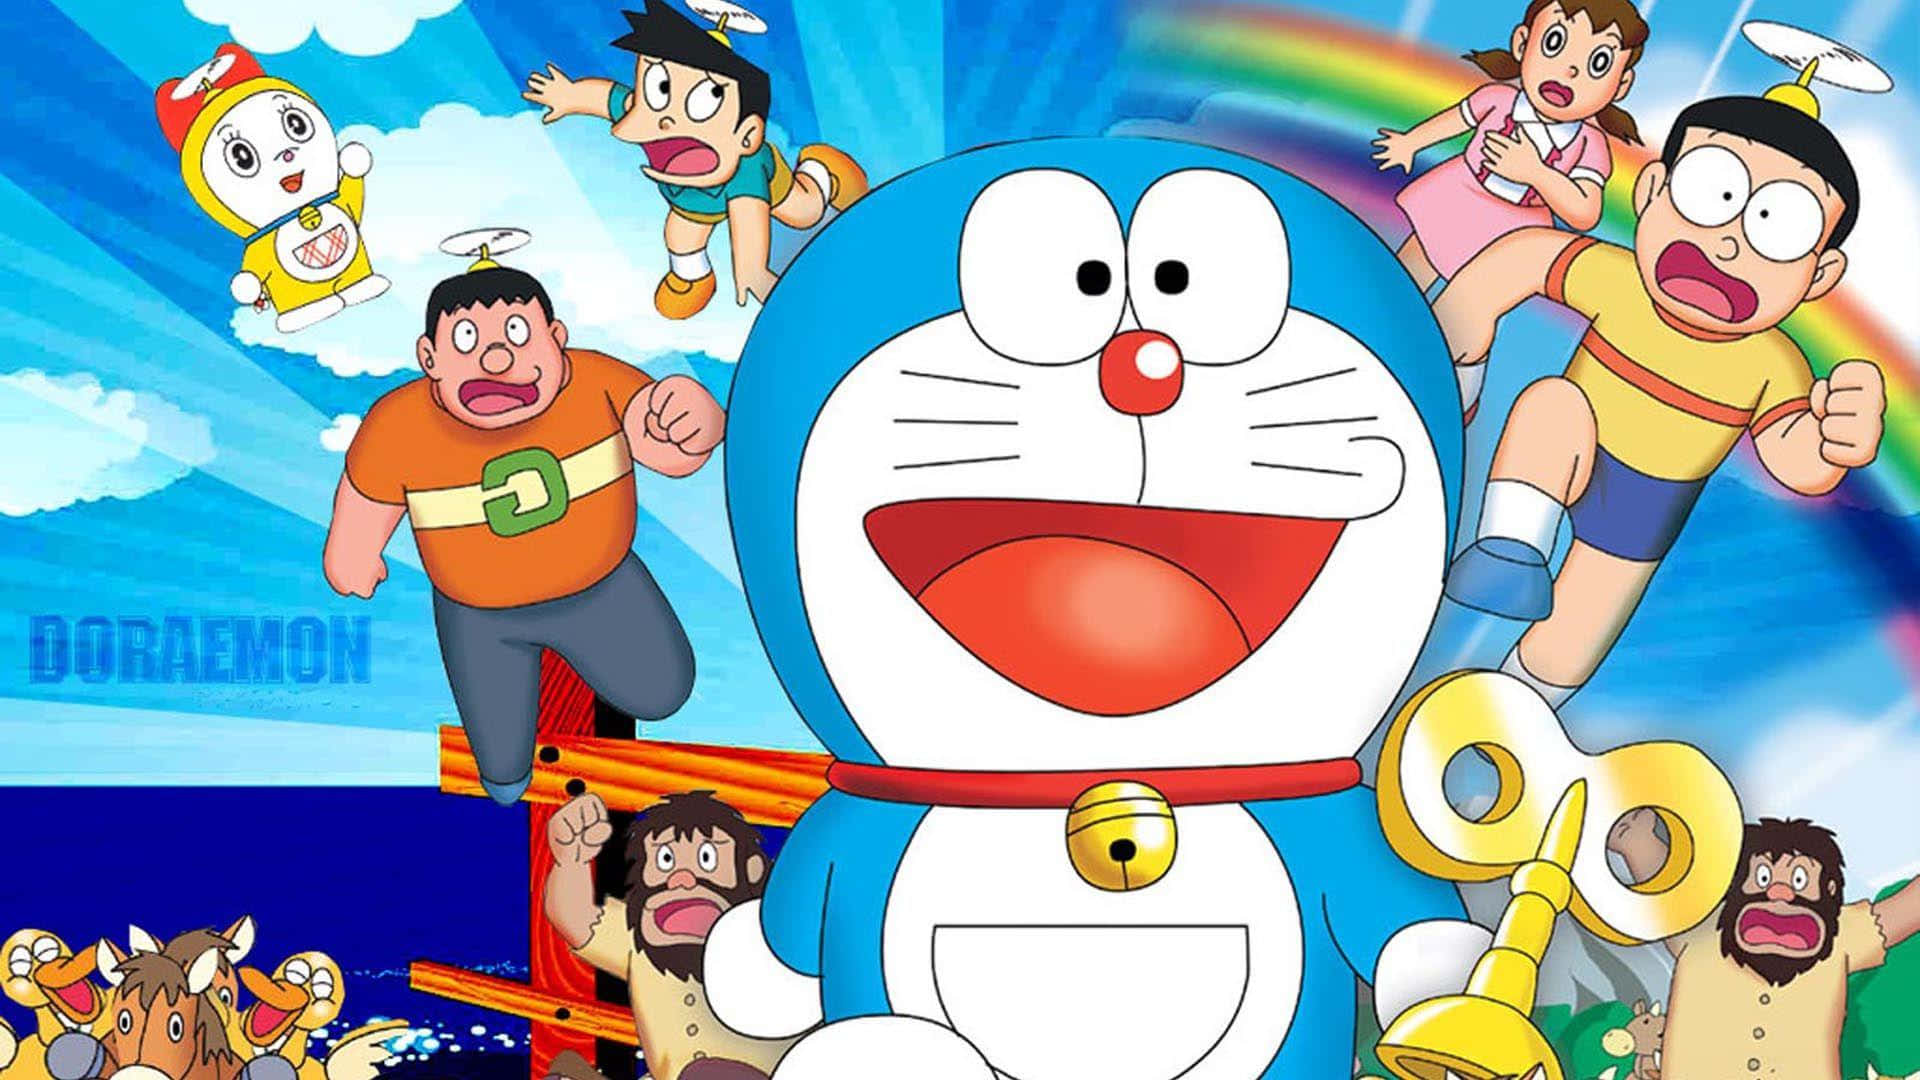 1.  A closeup image of the popular Japanese cartoon character, Doraemon